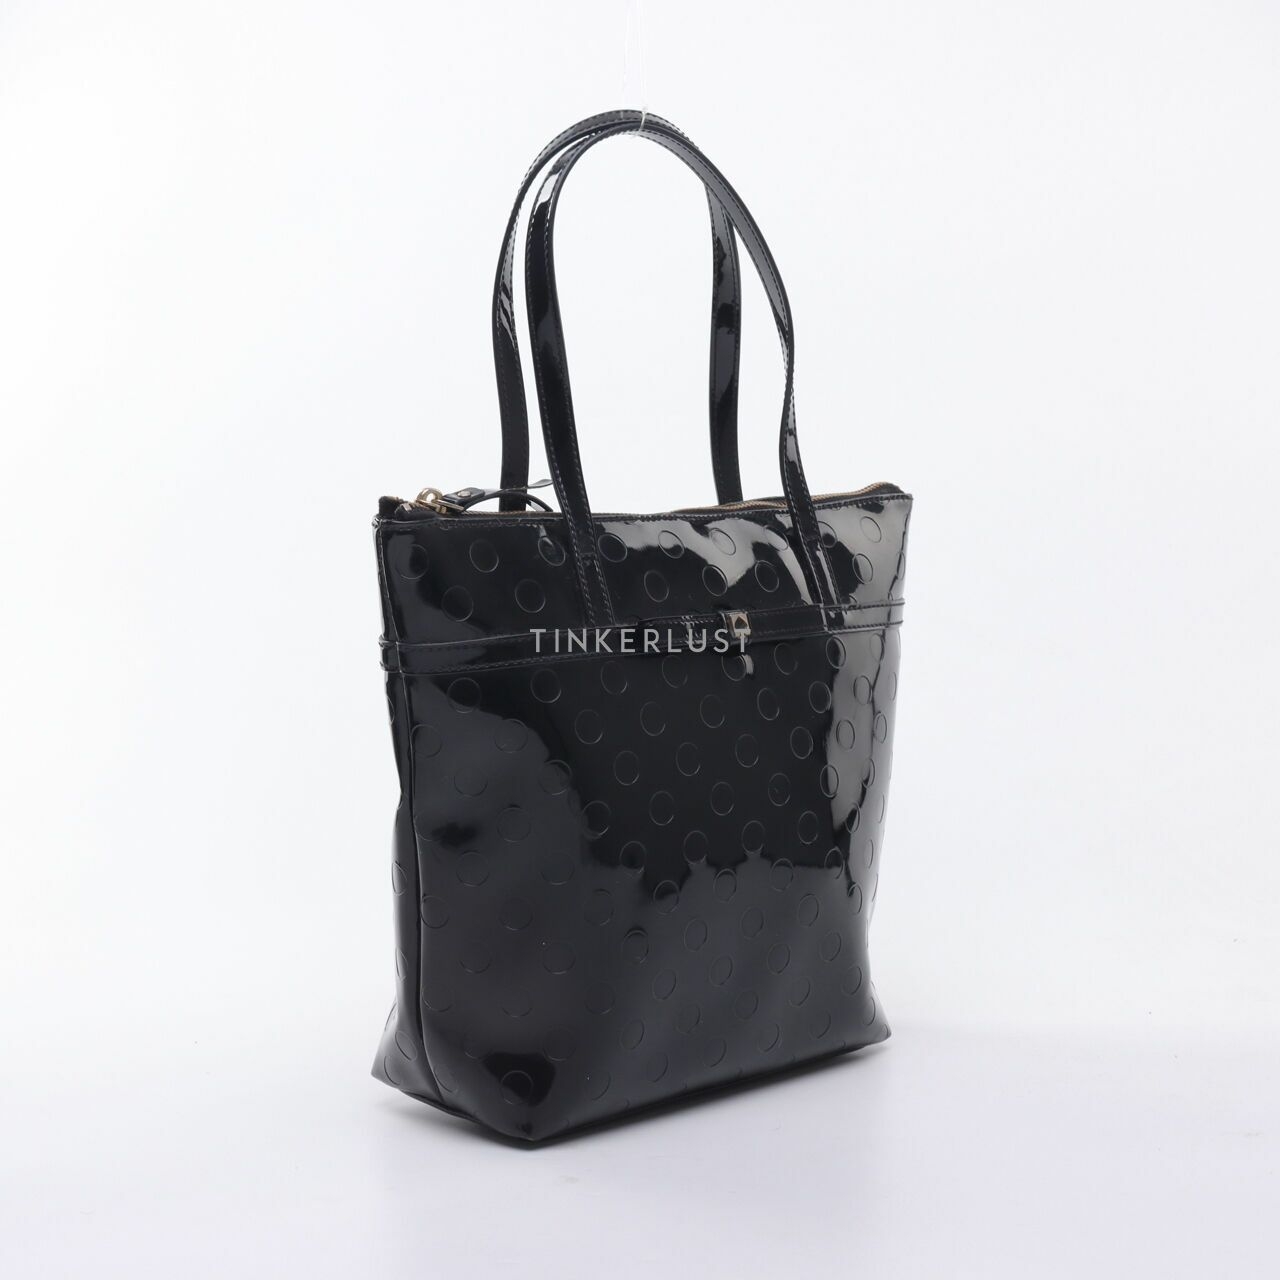 Kate Spade Black Camellia Street Tote Bag